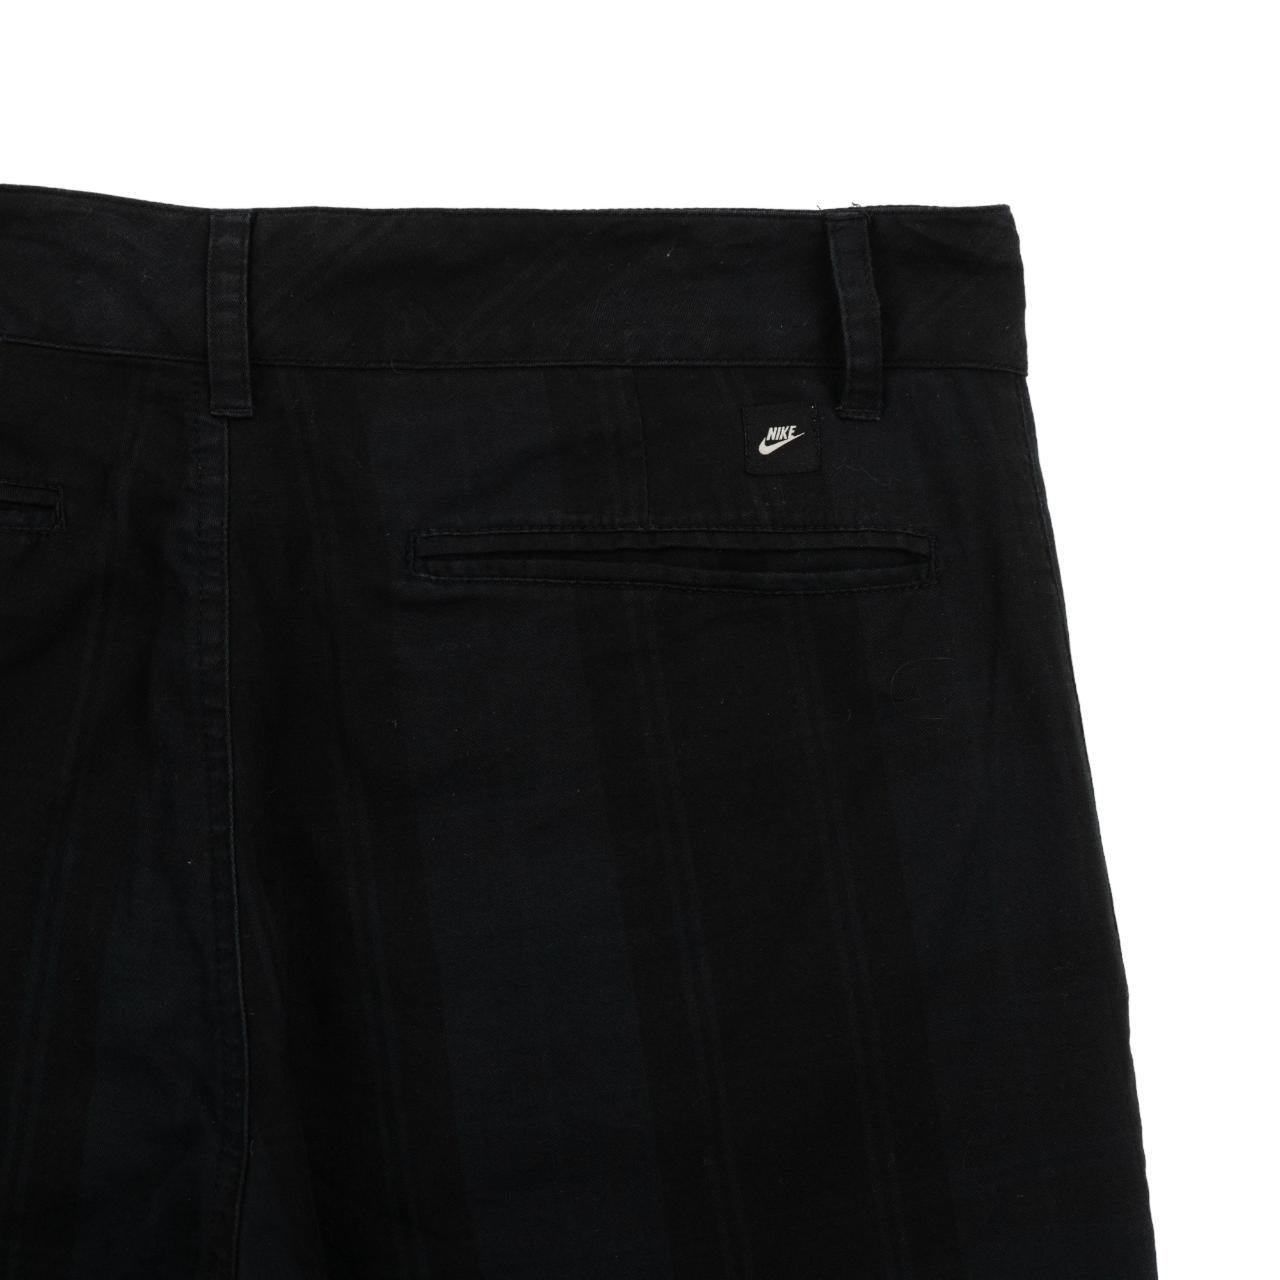 Vintage Nike Check Shorts Size W30 - Known Source